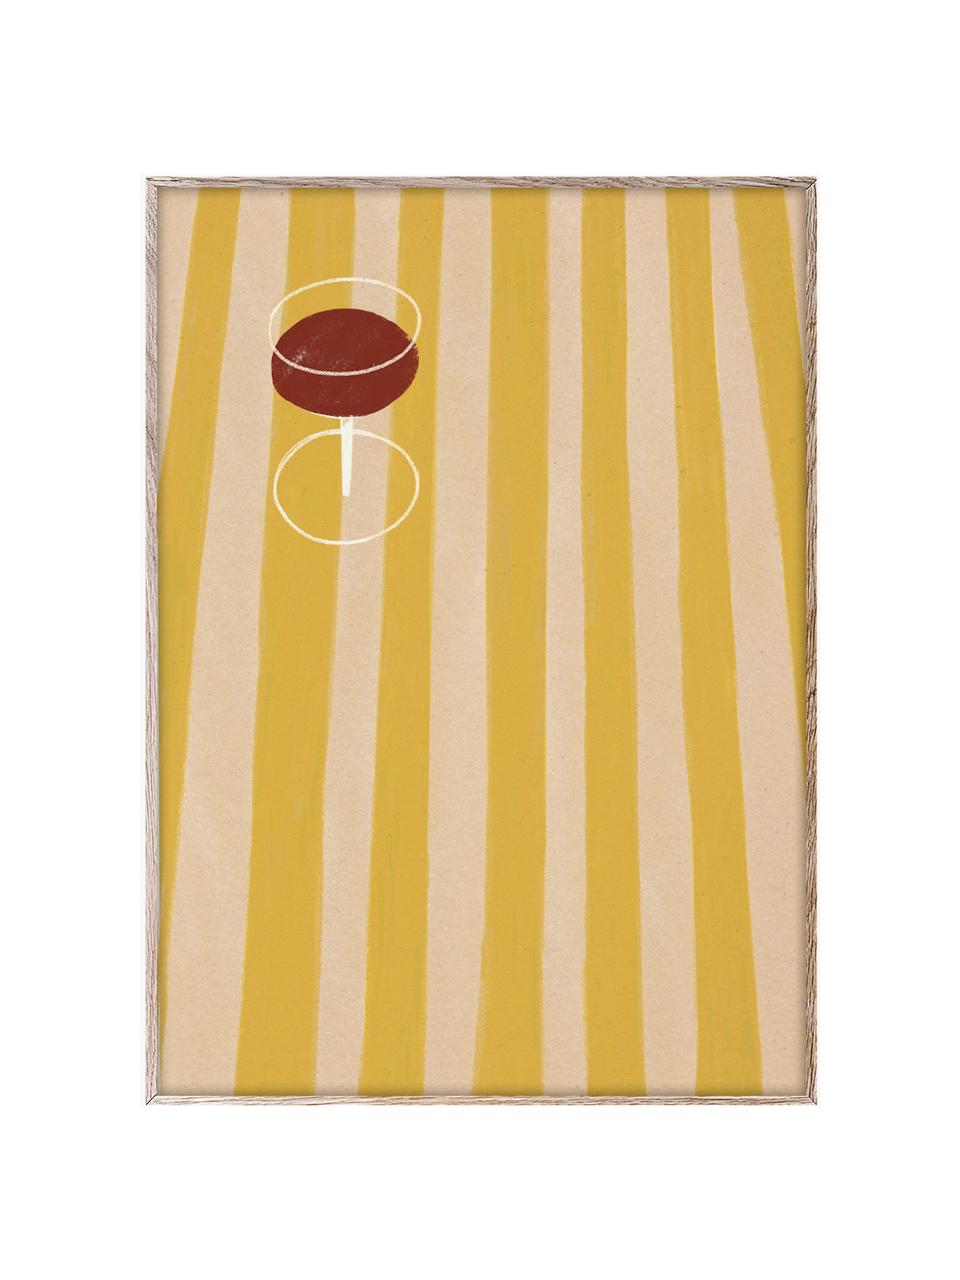 Poster SDO 04, 210 g mat Hahnemühle-papier, digitale print met 10 UV-bestendige kleuren, Zonnengeel, beige, wijnrood, B 30 x H 40 cm